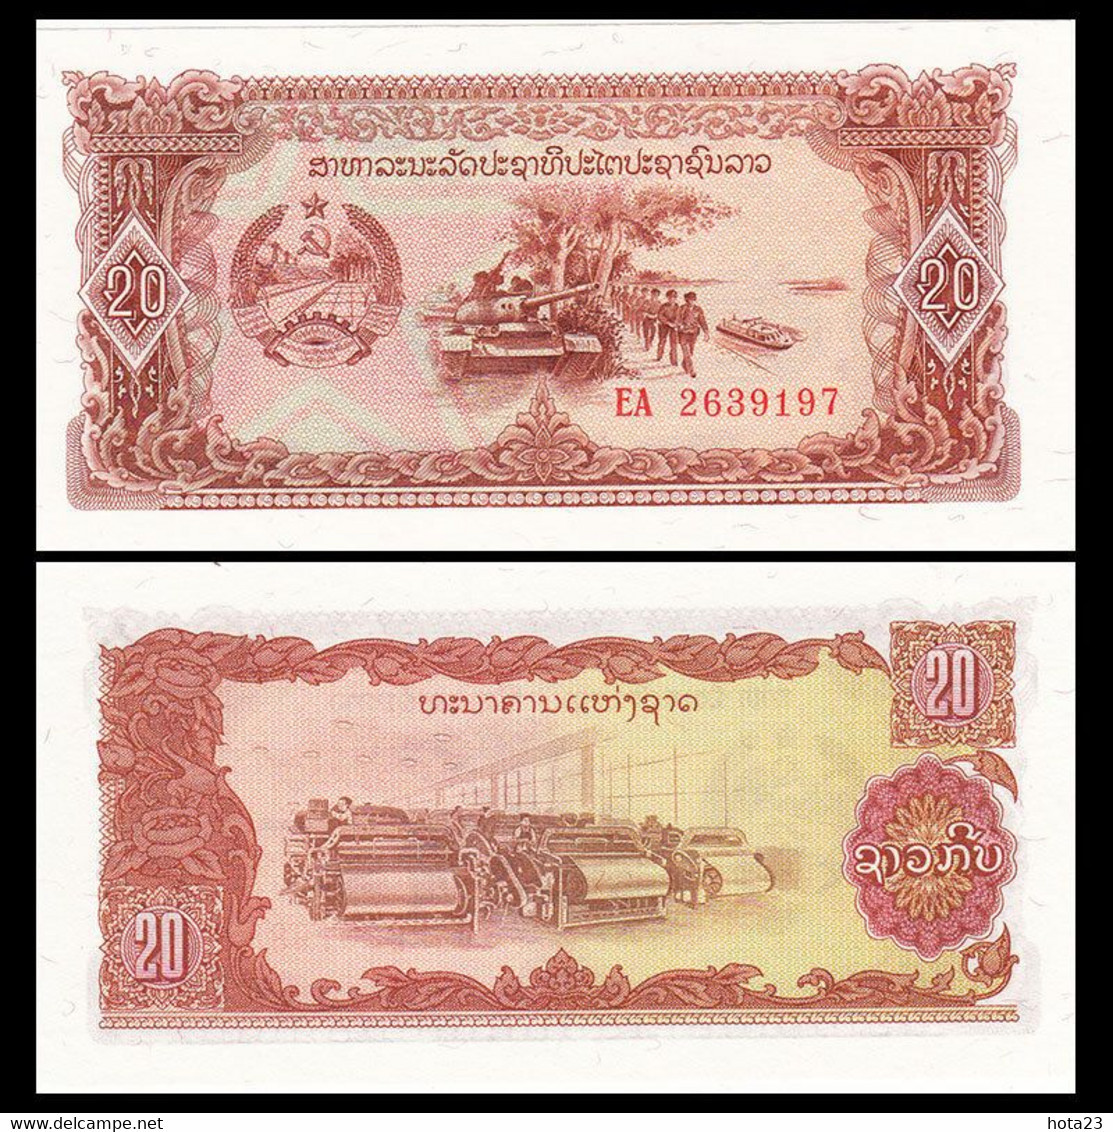 LAOS 20 Kip, 1979, P-28, Tanks/Mekong River, UNC World Currency - Laos